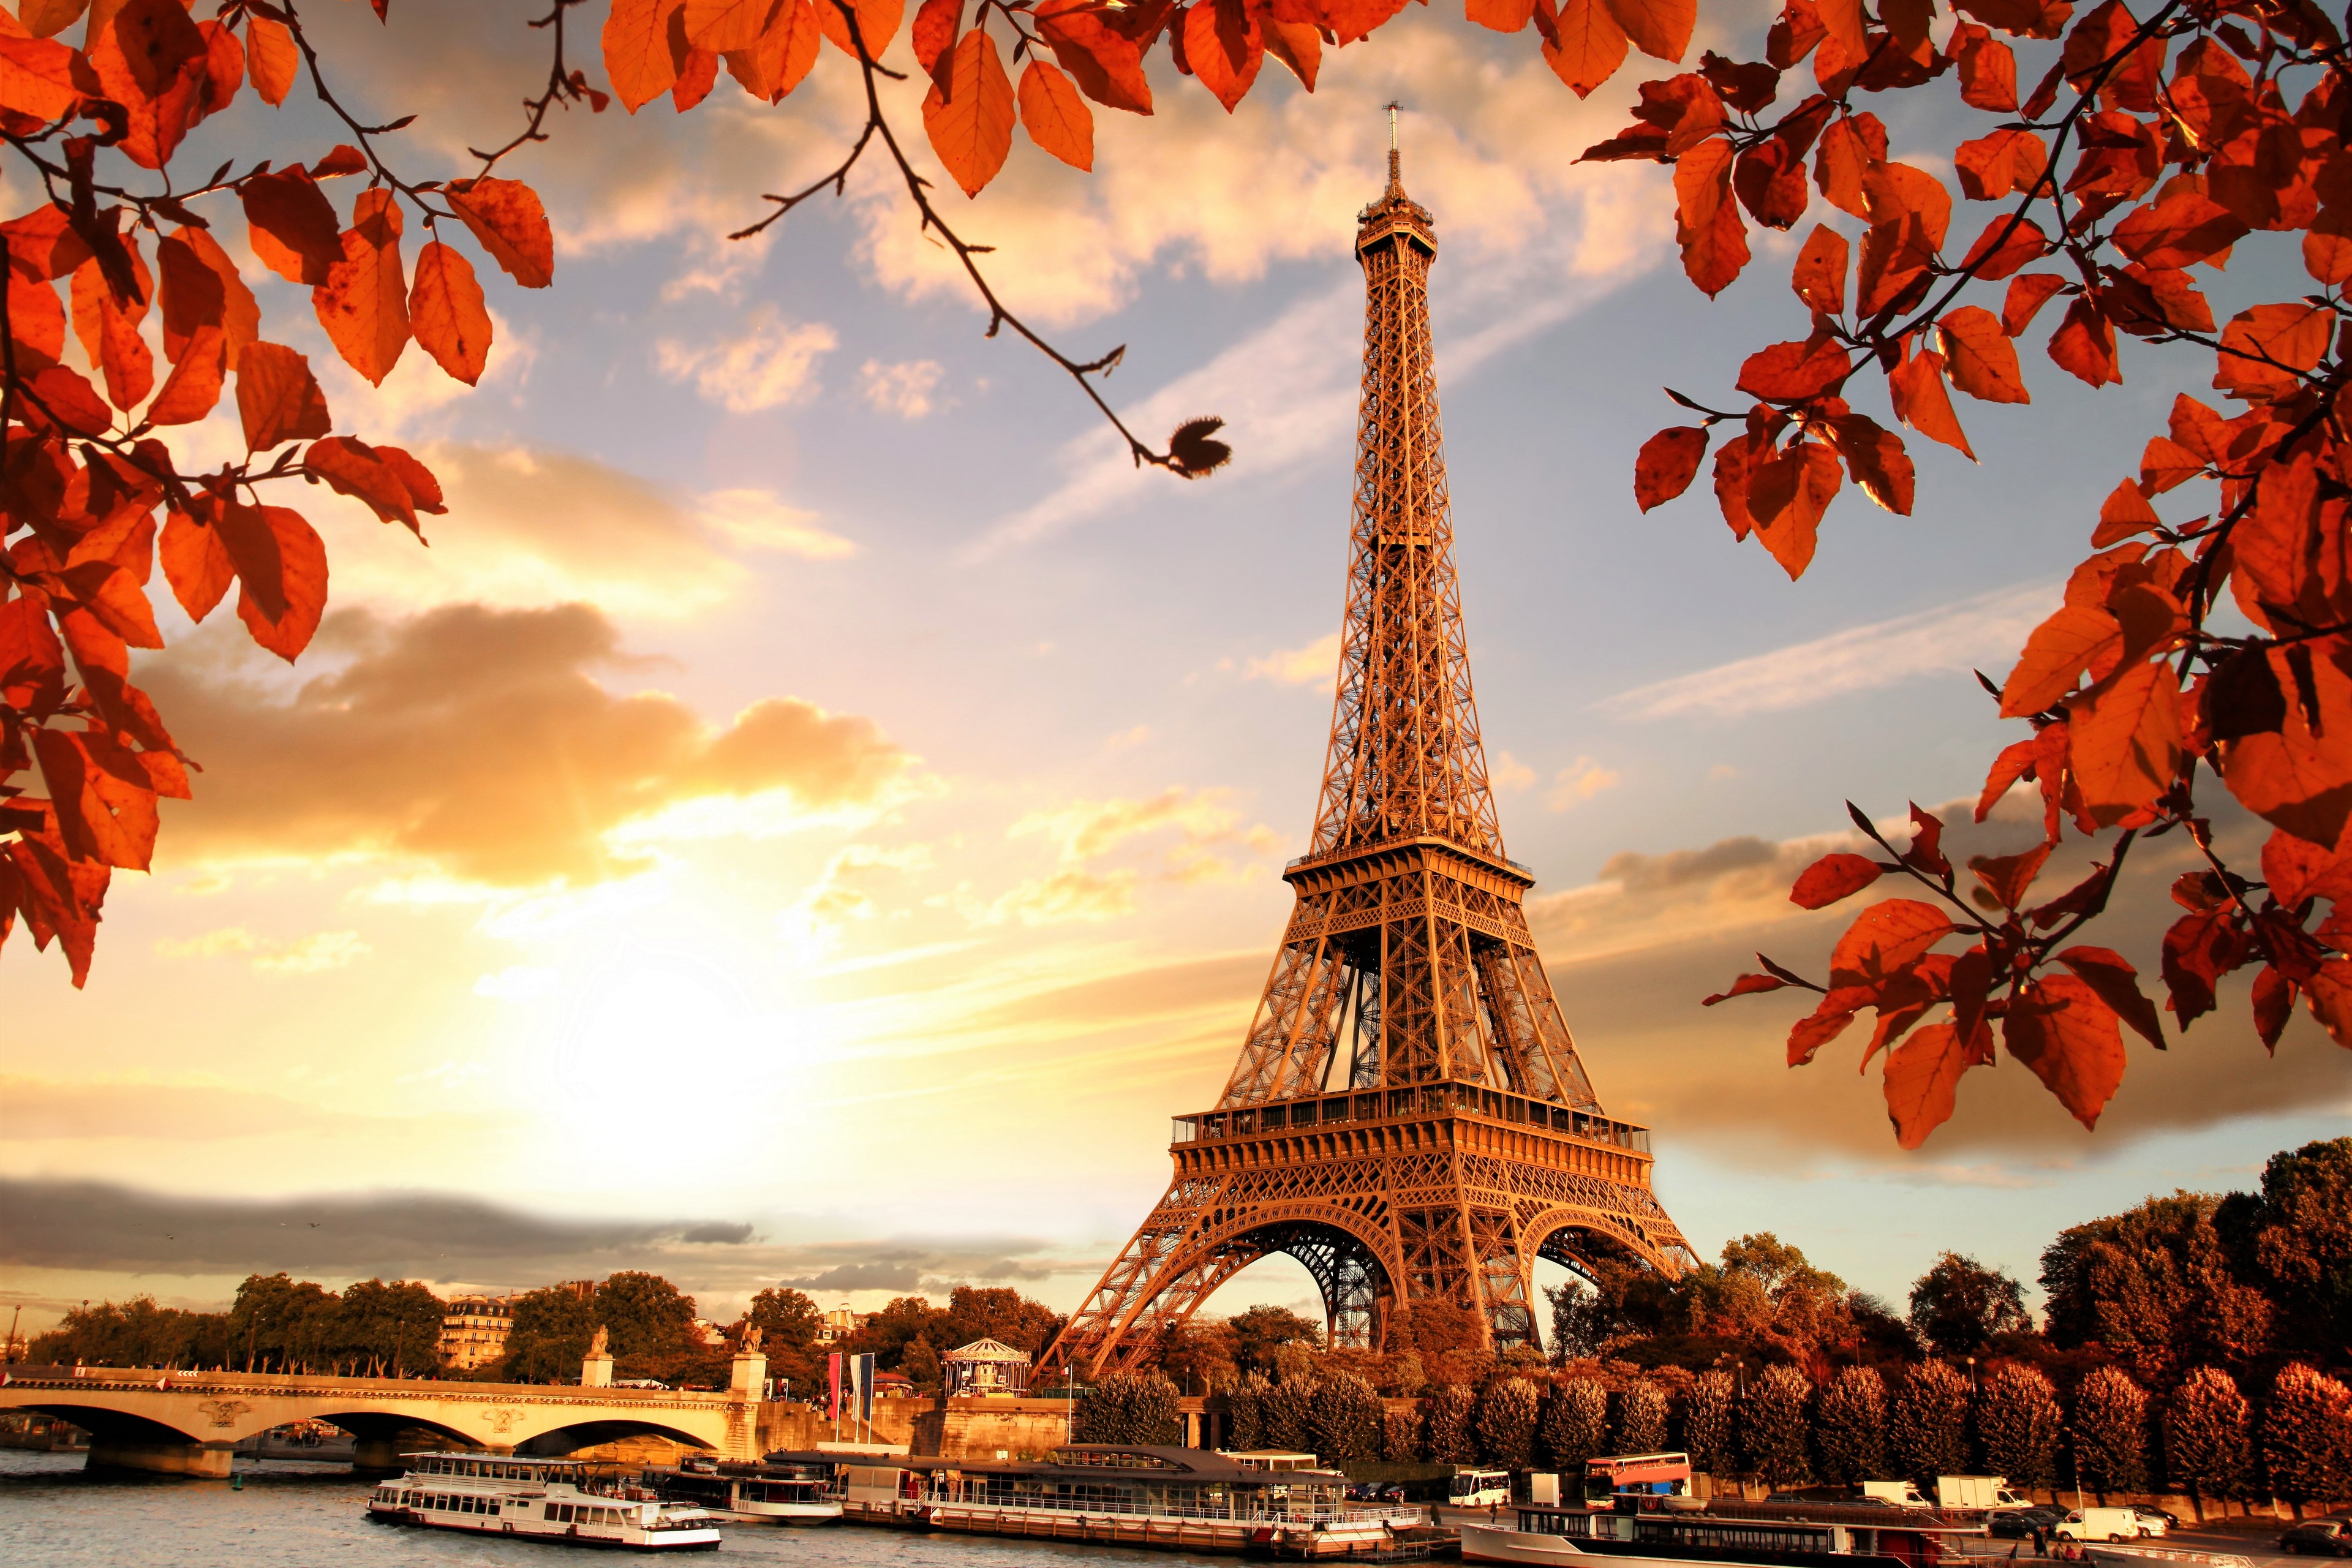 General 3840x2560 Paris Eiffel Tower sunlight sky clouds city leaves fall France bridge landmark